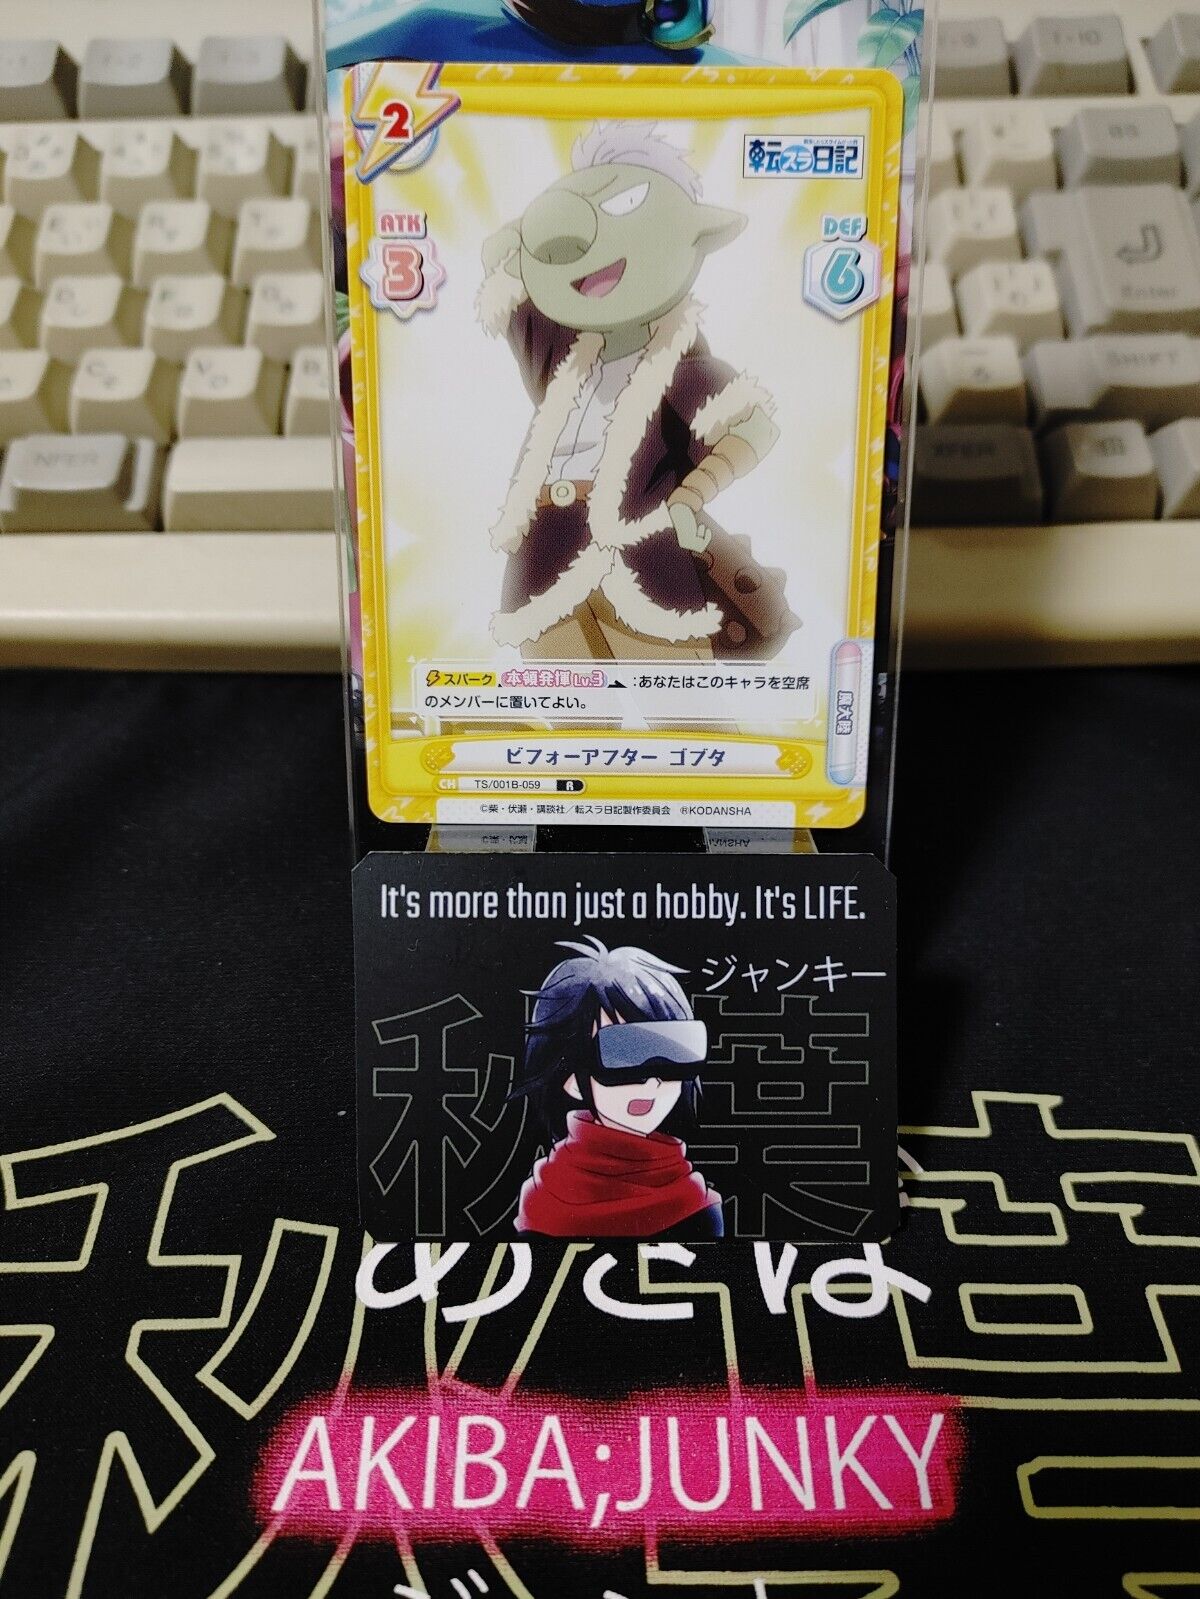 That Time I Got Reincarnated As A Slime Card Gobta TS/001B-059 Japan